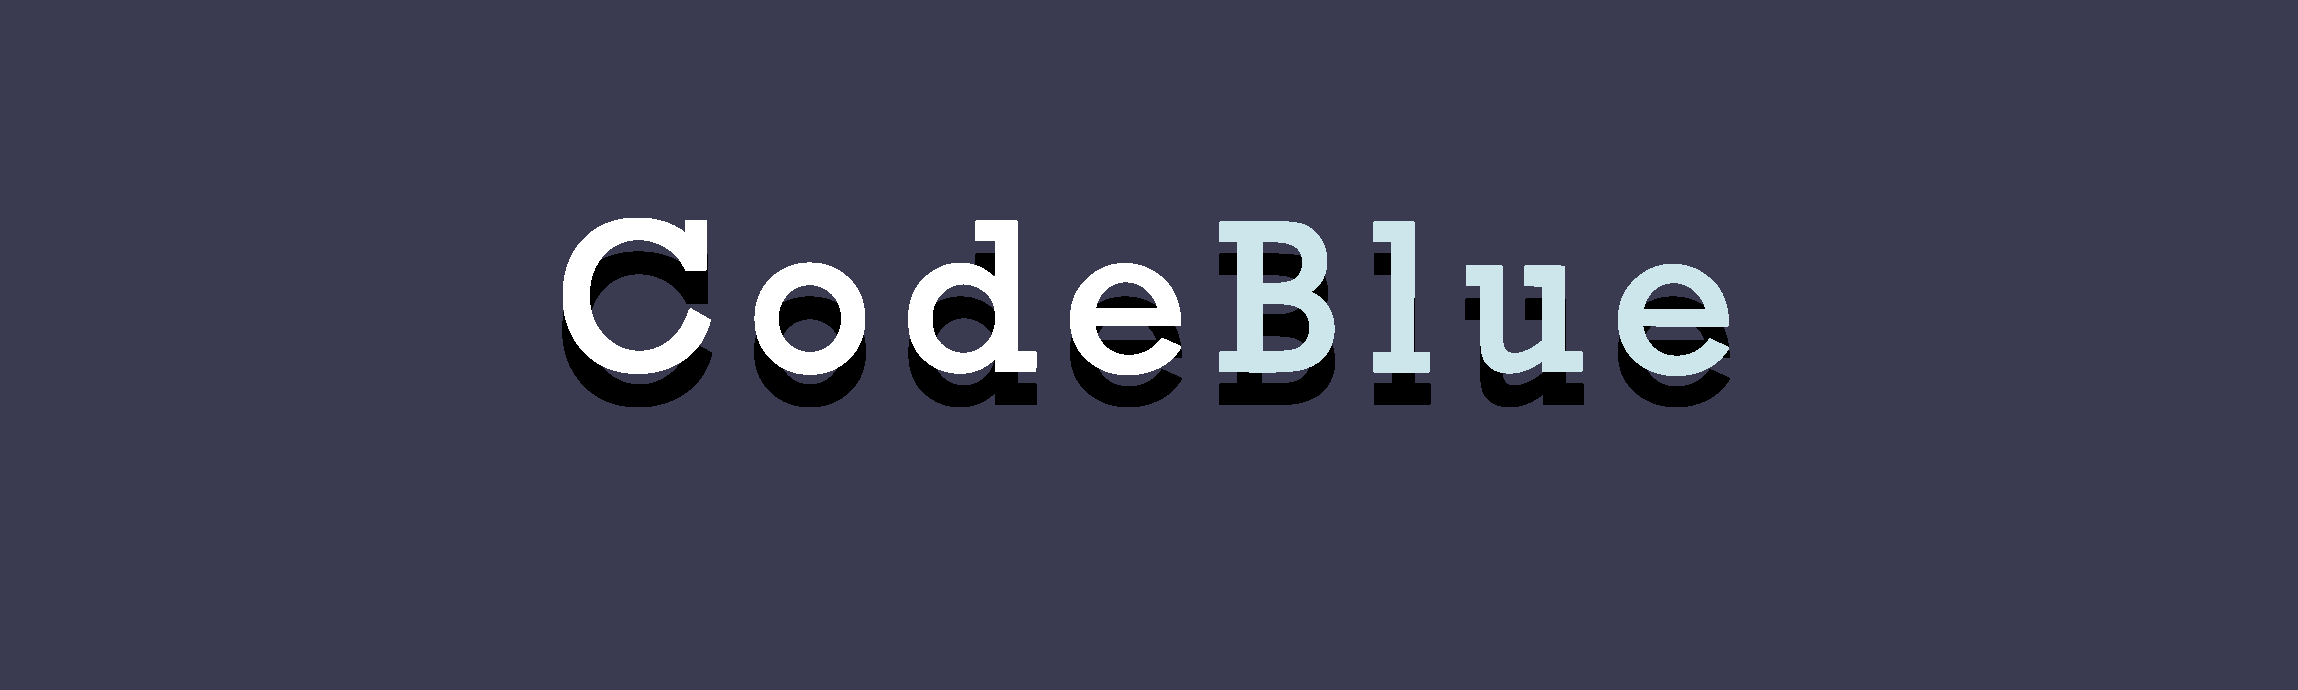 Code Blue